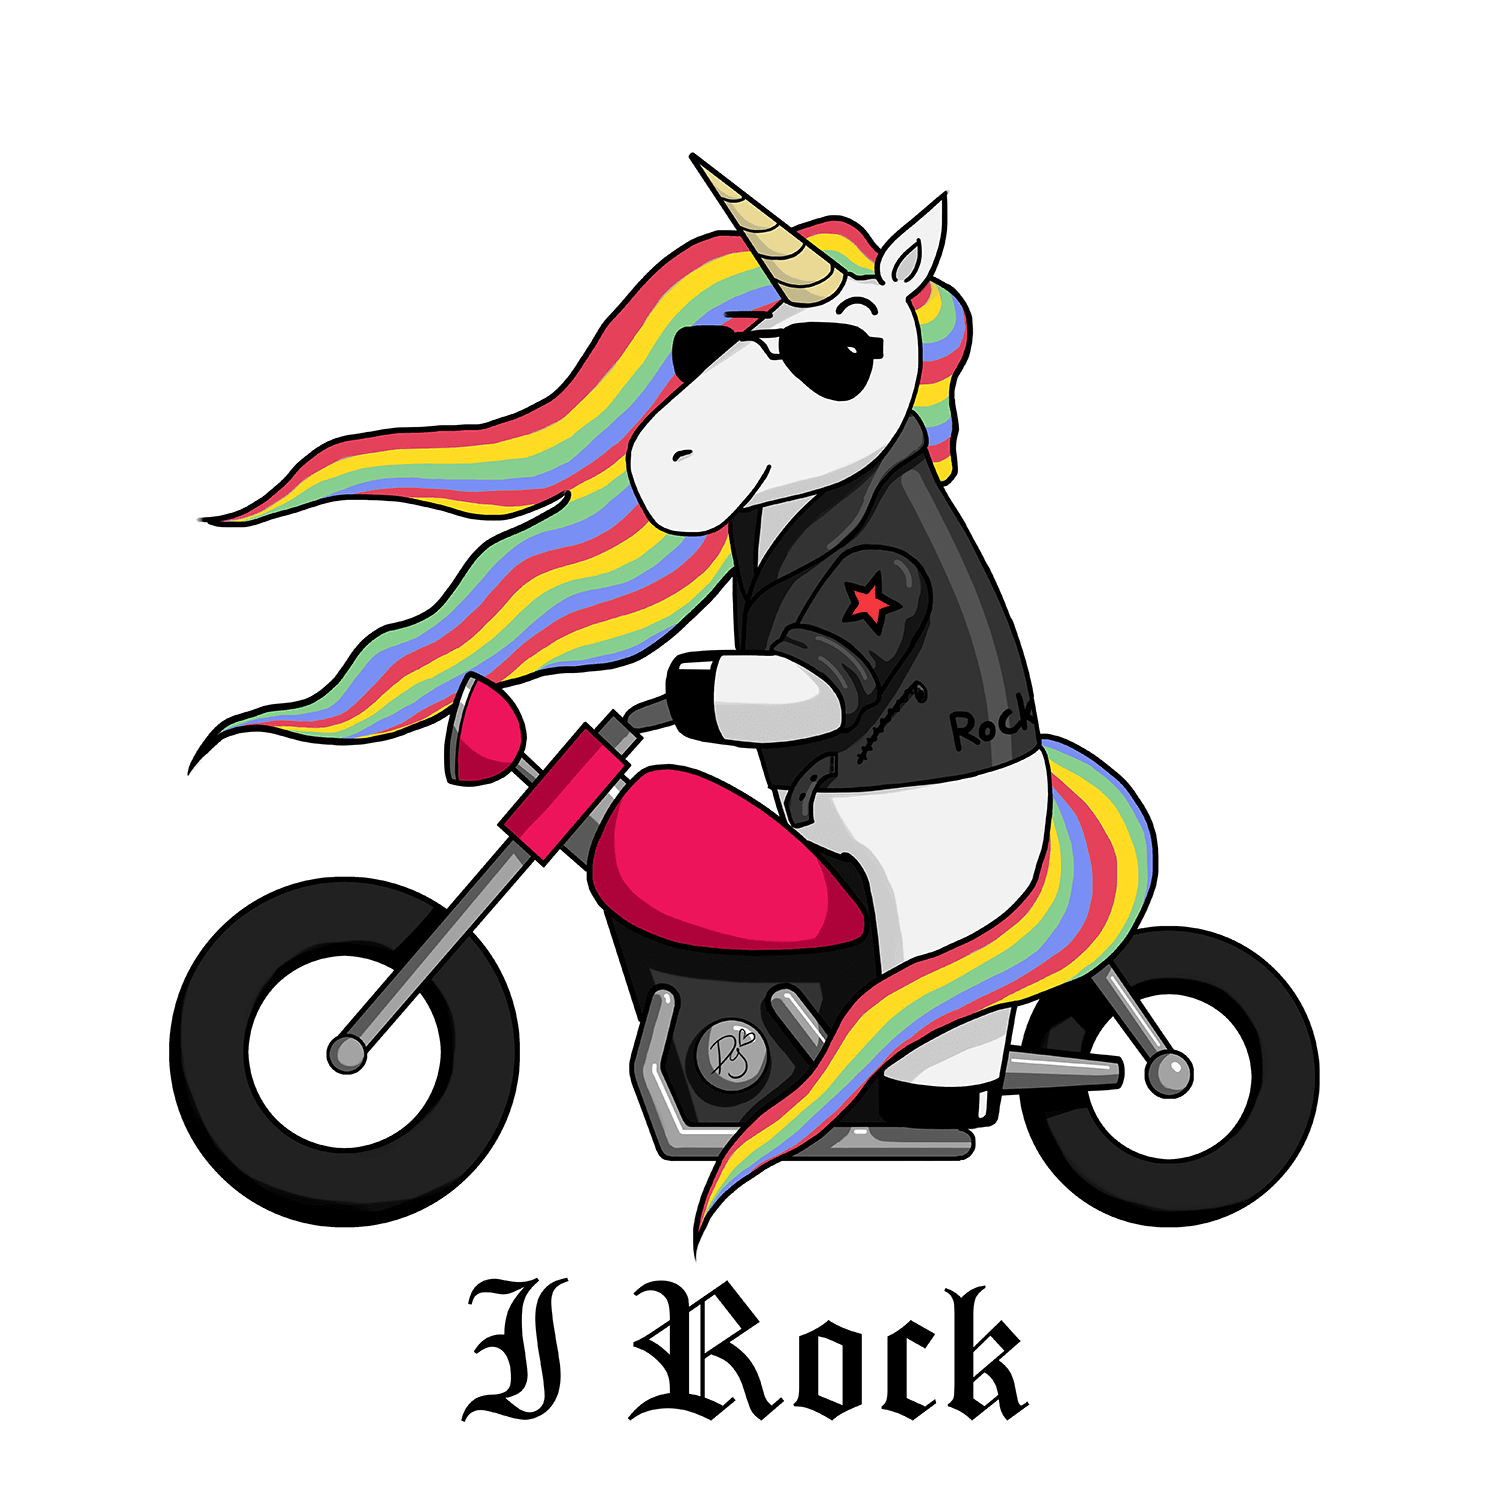 Rock n' unicorn